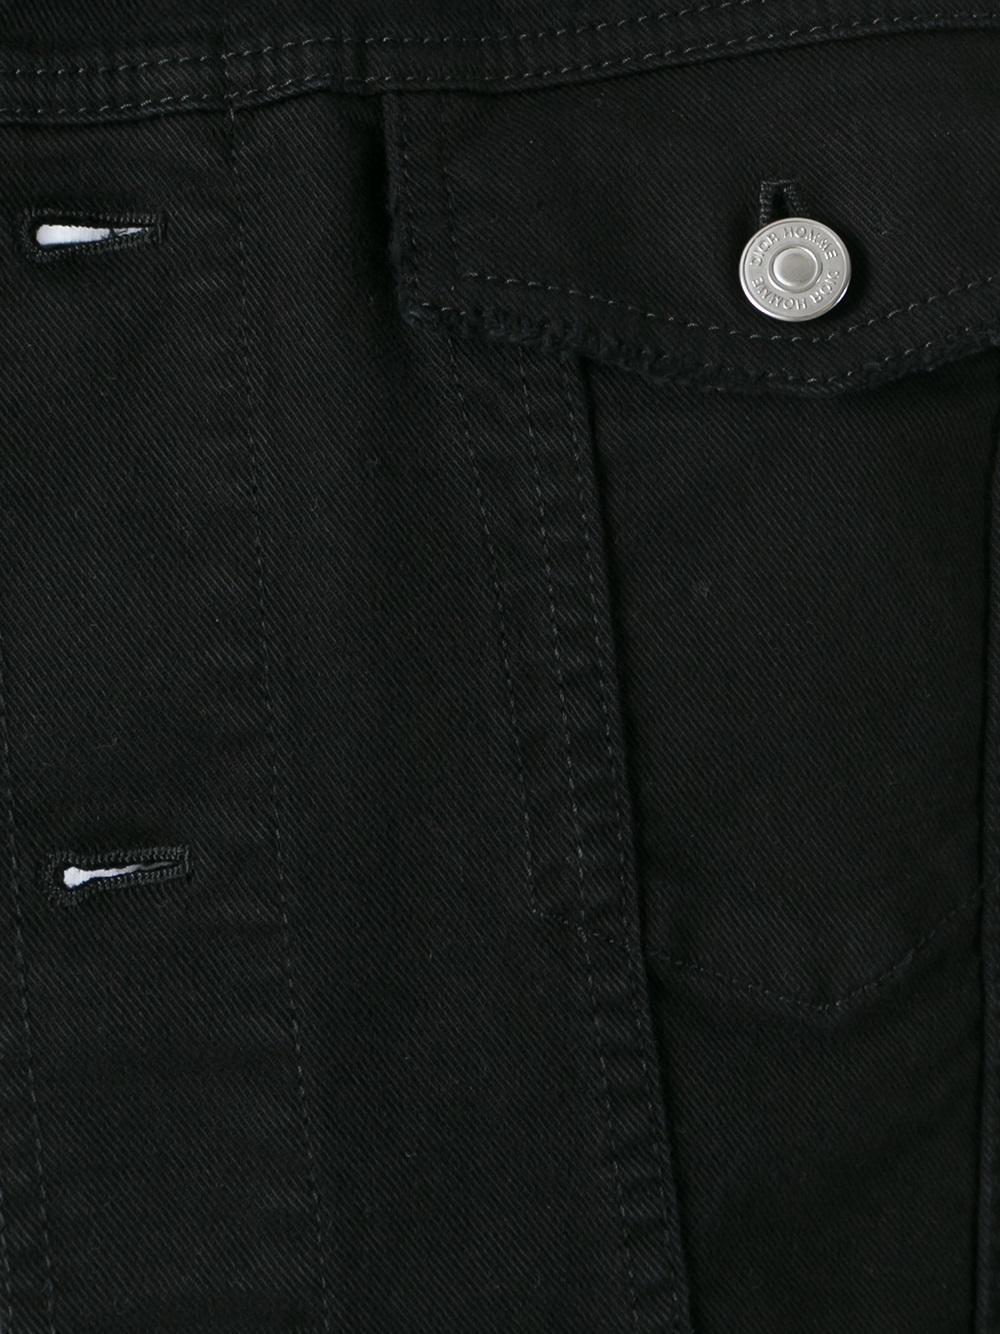 Capo DENIM Jacket  Black  CAPO  Meaning Behind The Brand